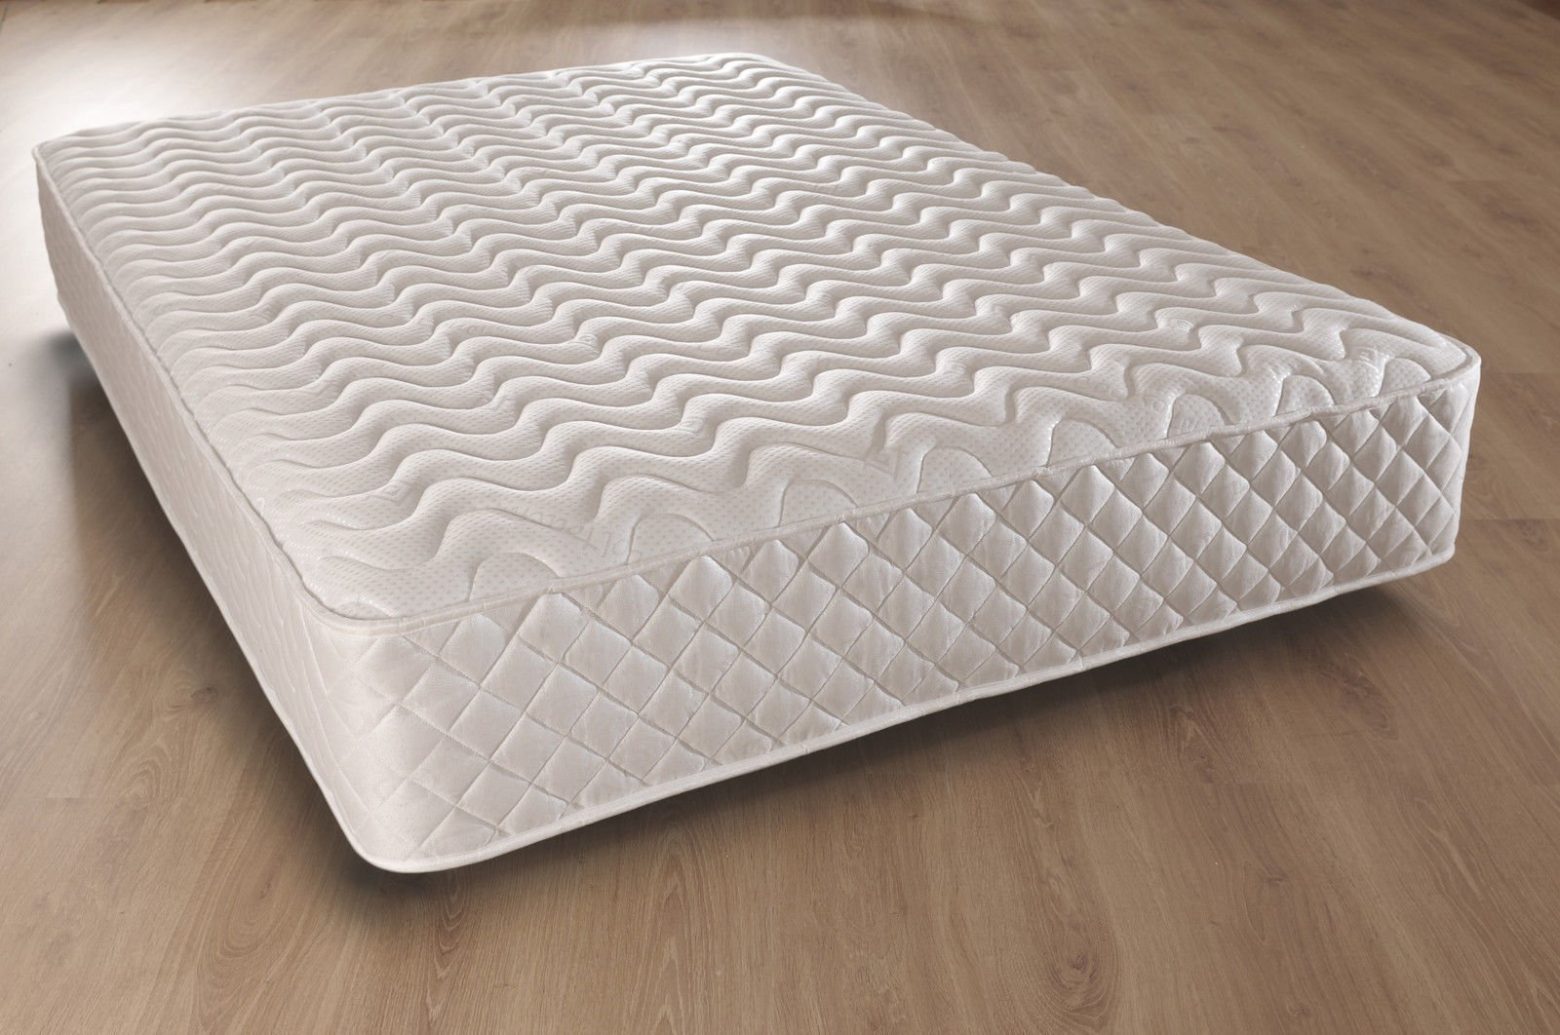 foam mattress or spring mattress for baby